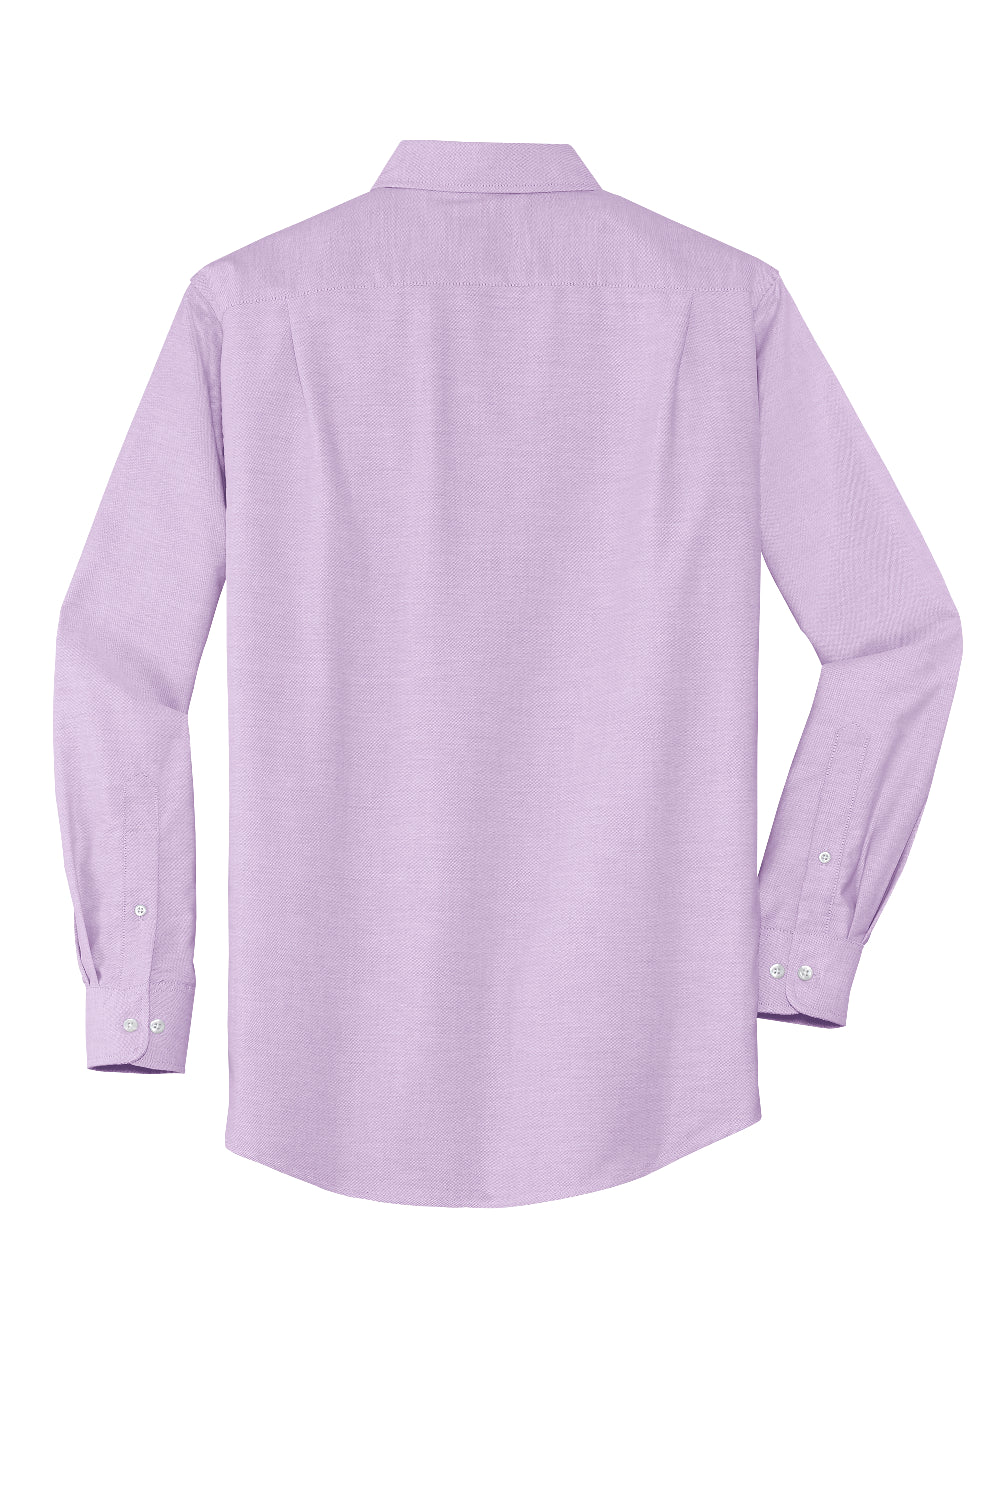 Port Authority S658/TS658 SuperPro Oxford Wrinkle Resistant Long Sleeve Button Down Shirt w/ Pocket Soft Purple Flat Back